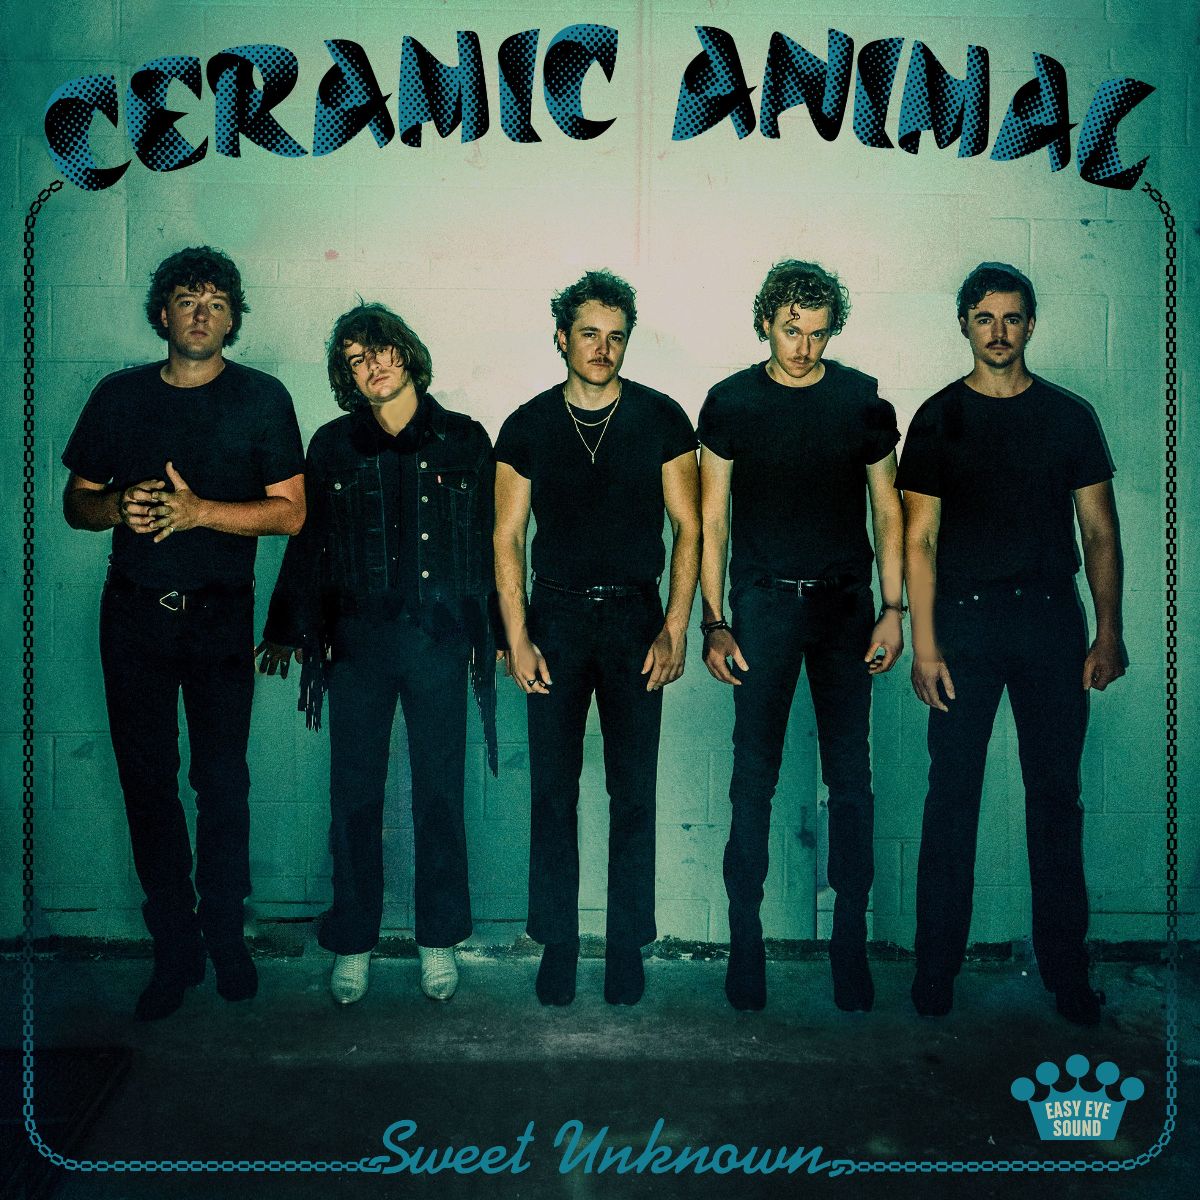 Ceramic Animal releases their Easy Eye Sound debut album, 'Sweet Unknown'